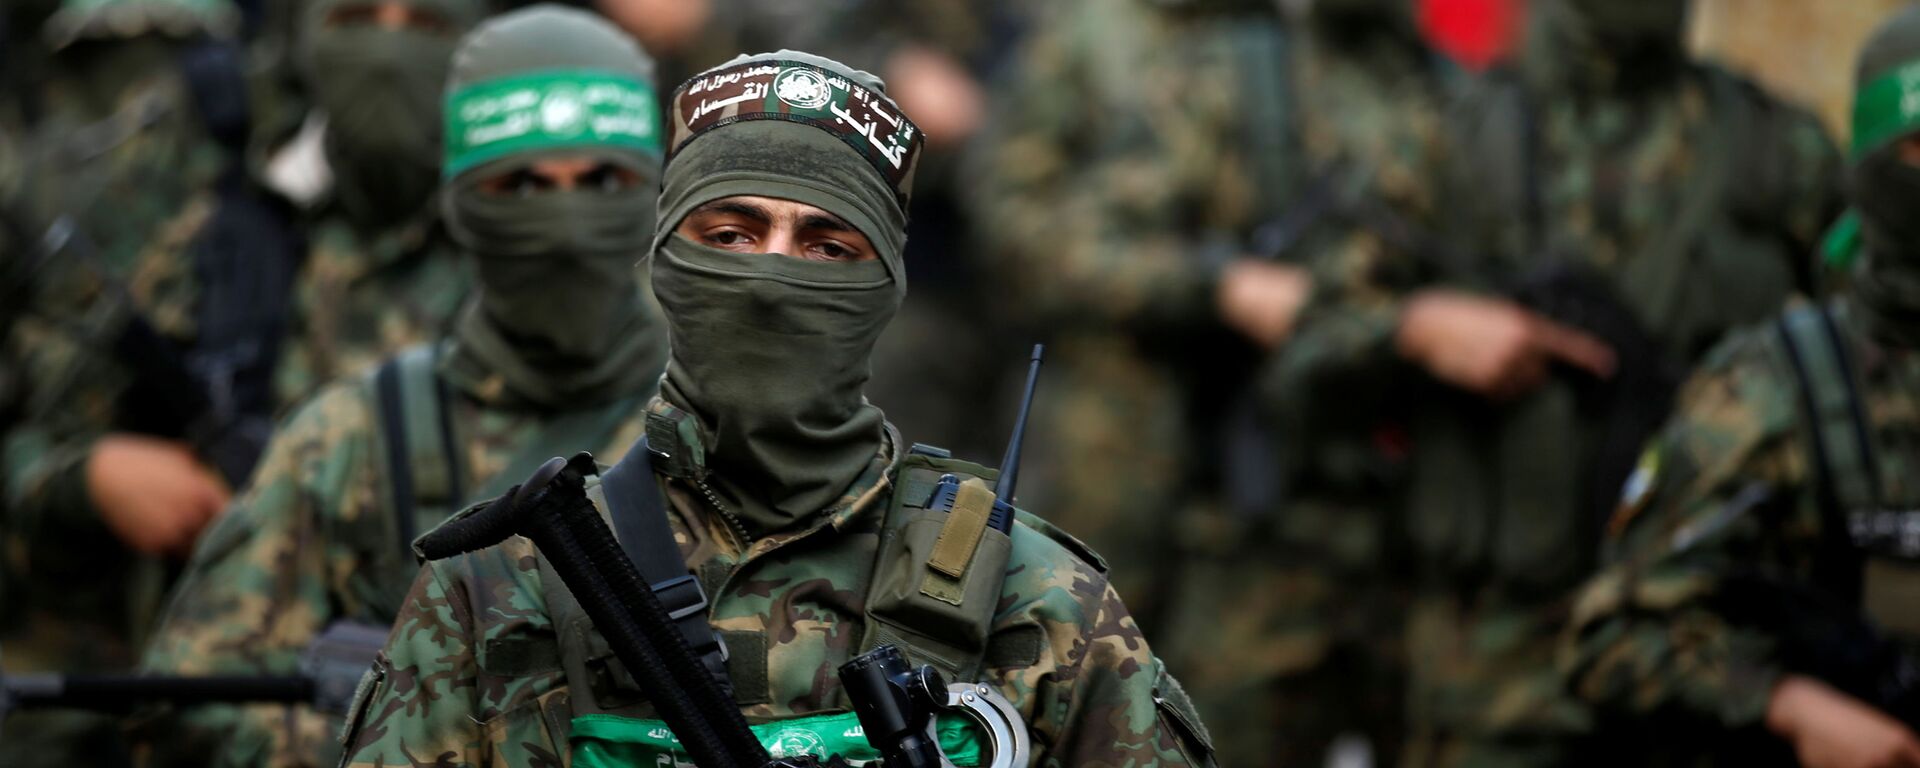 Palestinian Hamas militants take part in an anti-Israel rally in Gaza City May 22, 2021. REUTERS/Mohammed Salem - Sputnik International, 1920, 08.10.2021